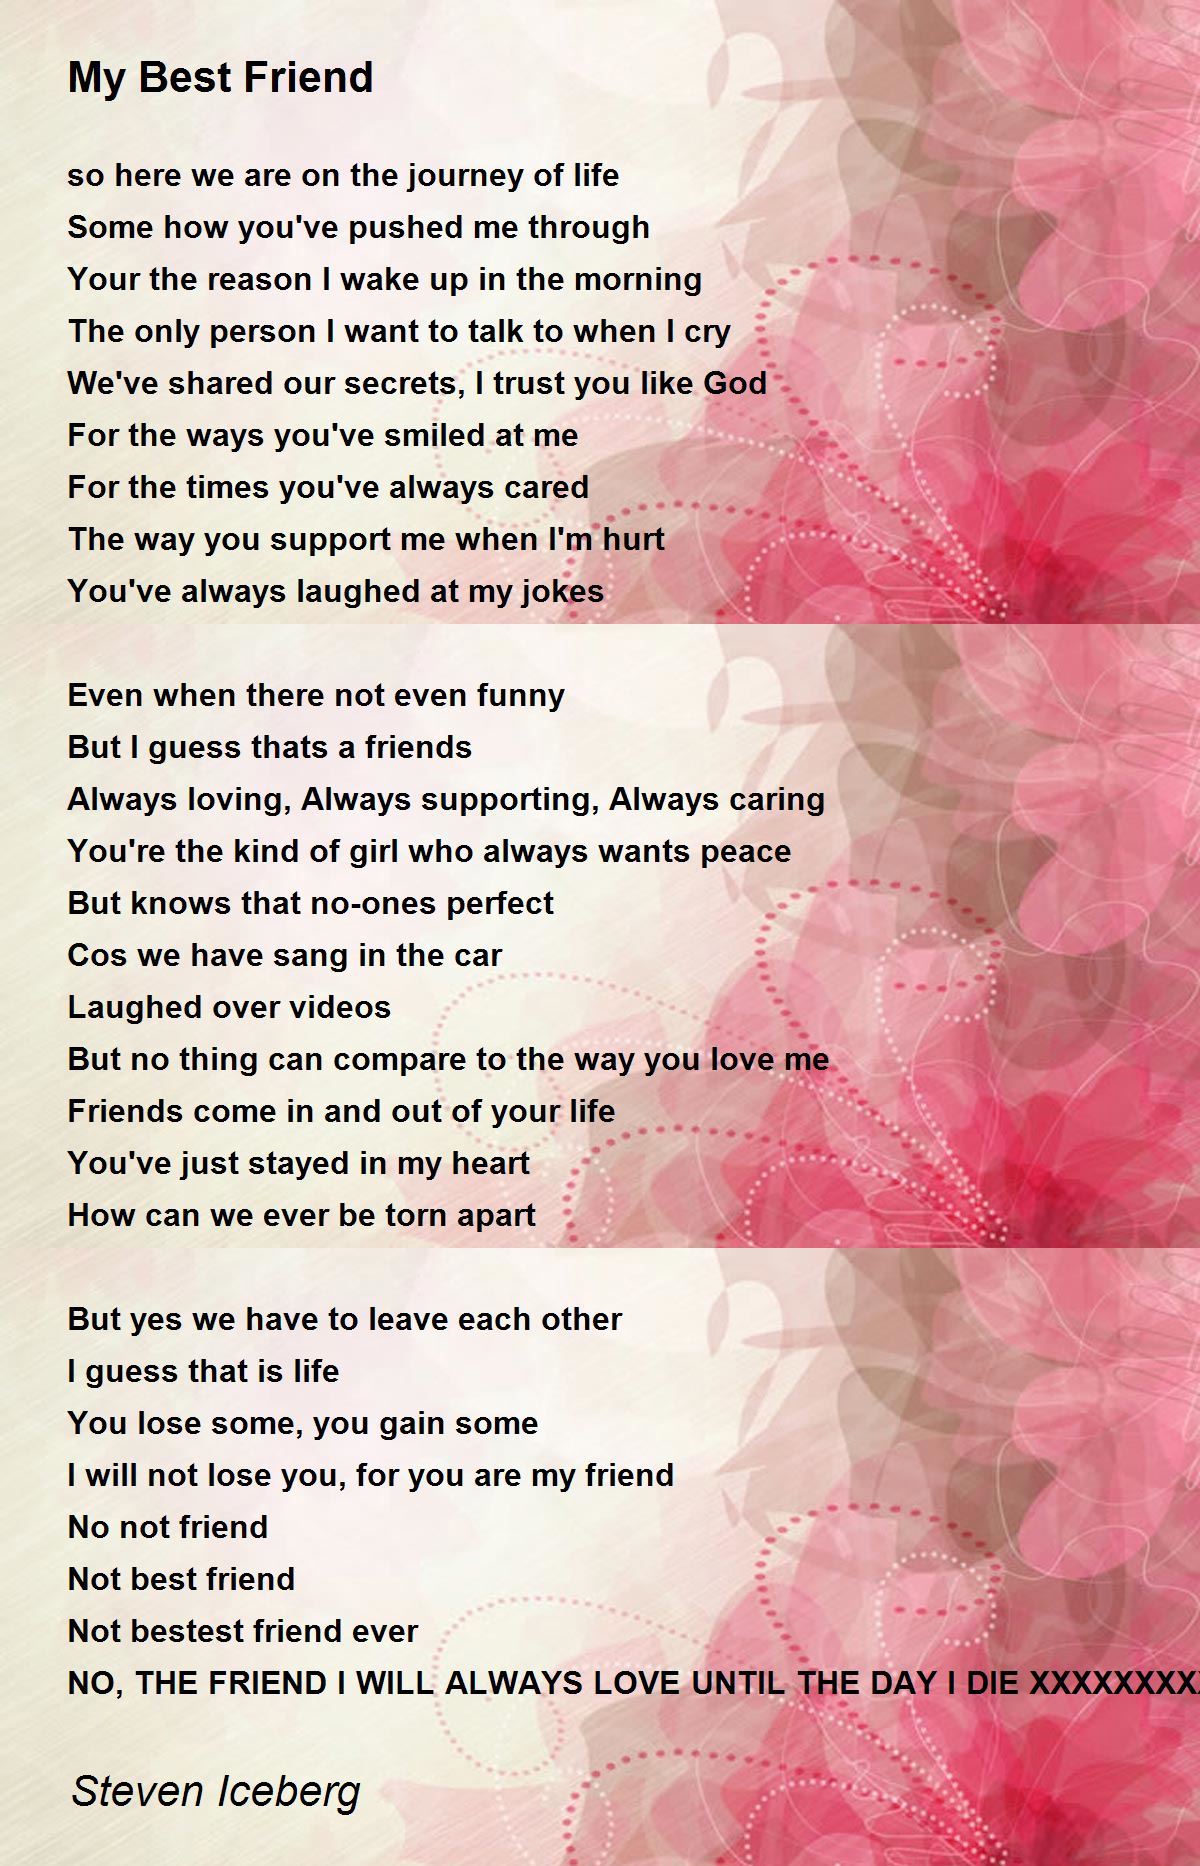 My Best Friend - My Best Friend Poem by Steven Iceberg